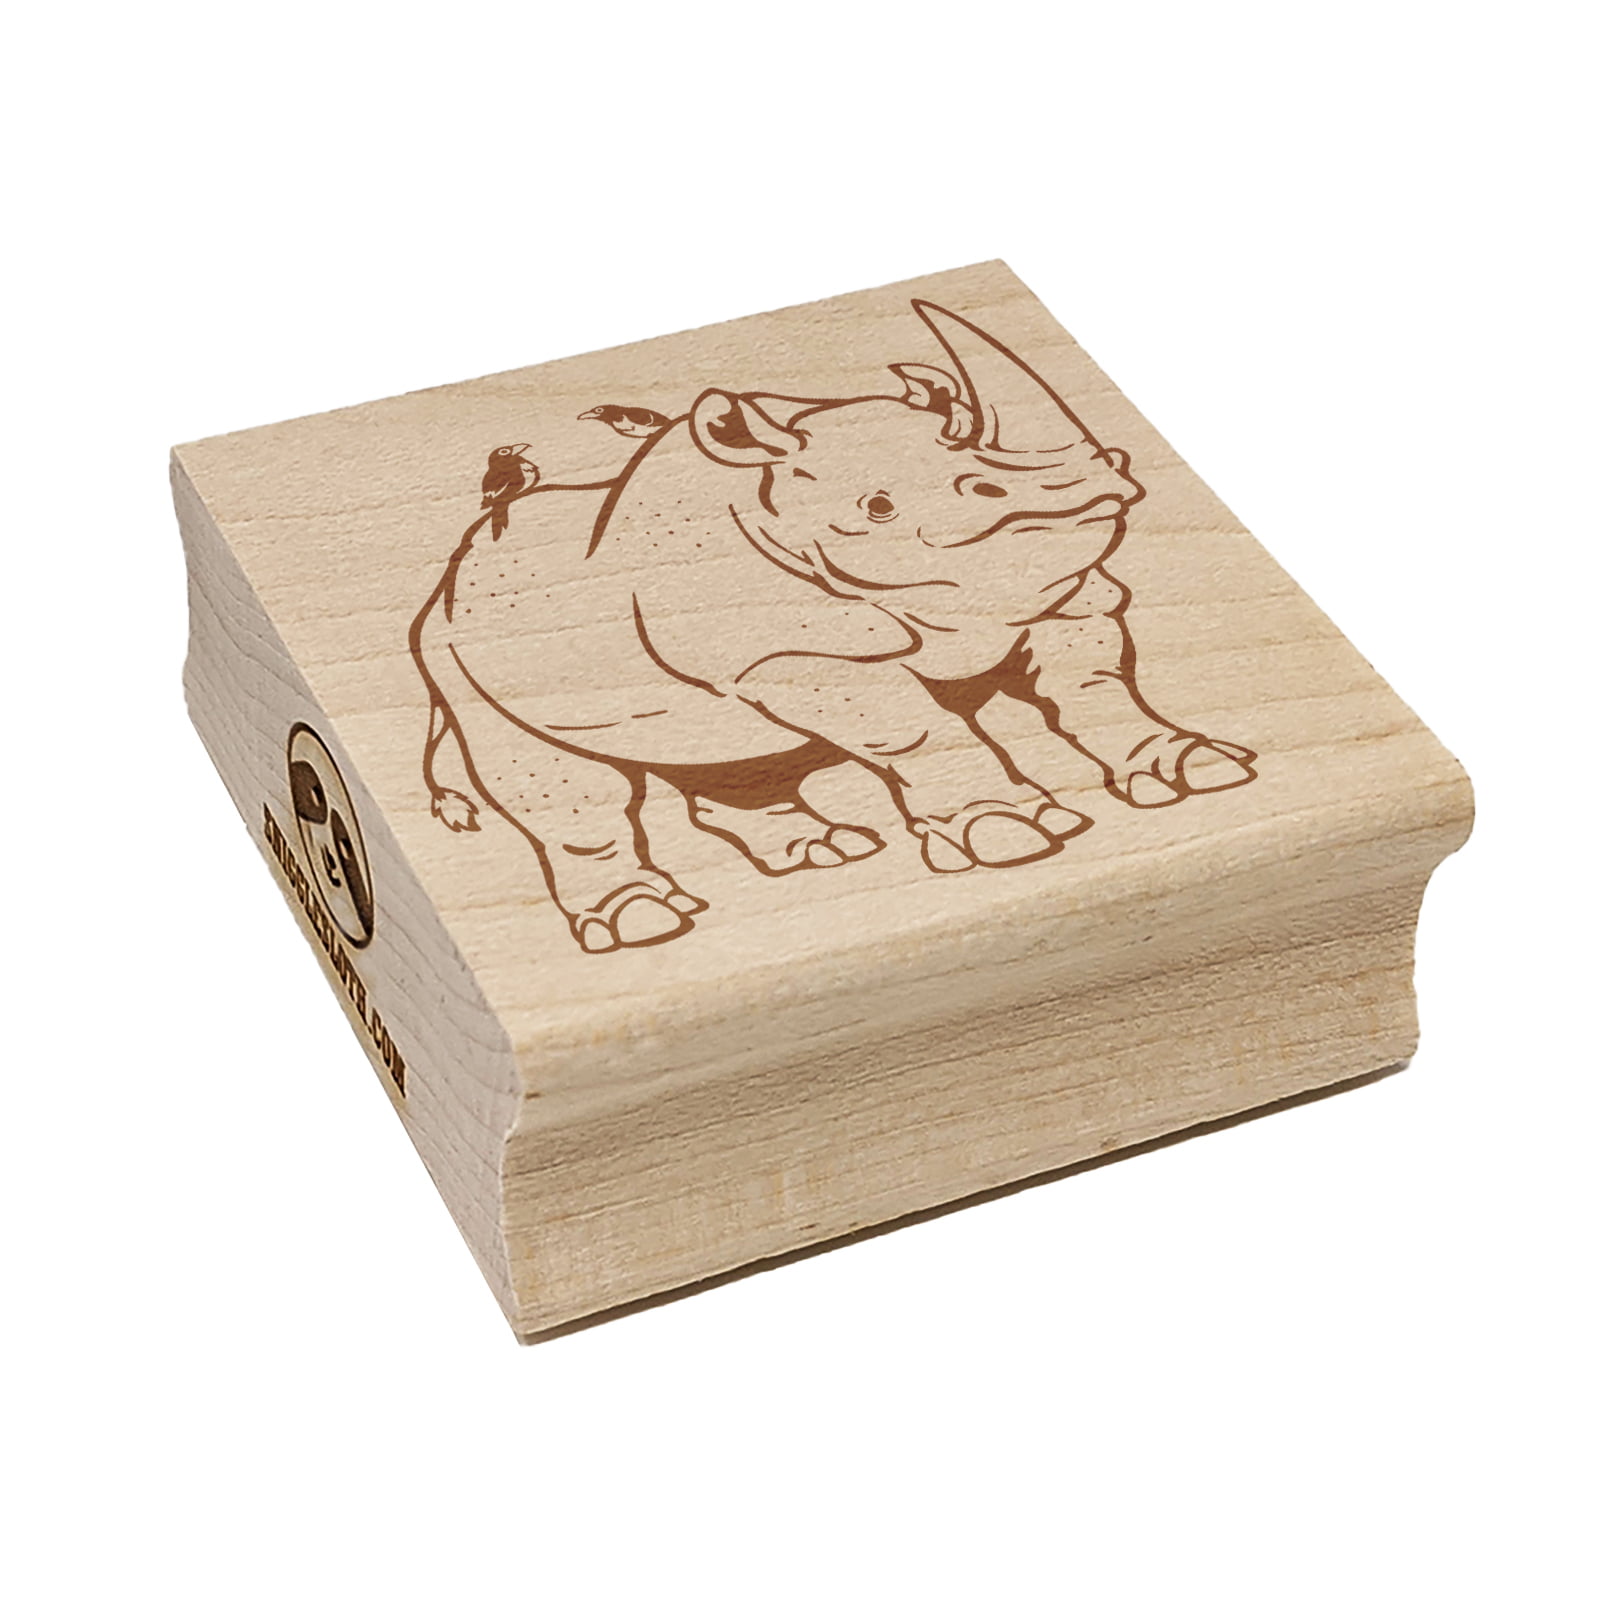 Rhinoceros Wooden Rubber Stamp No 25